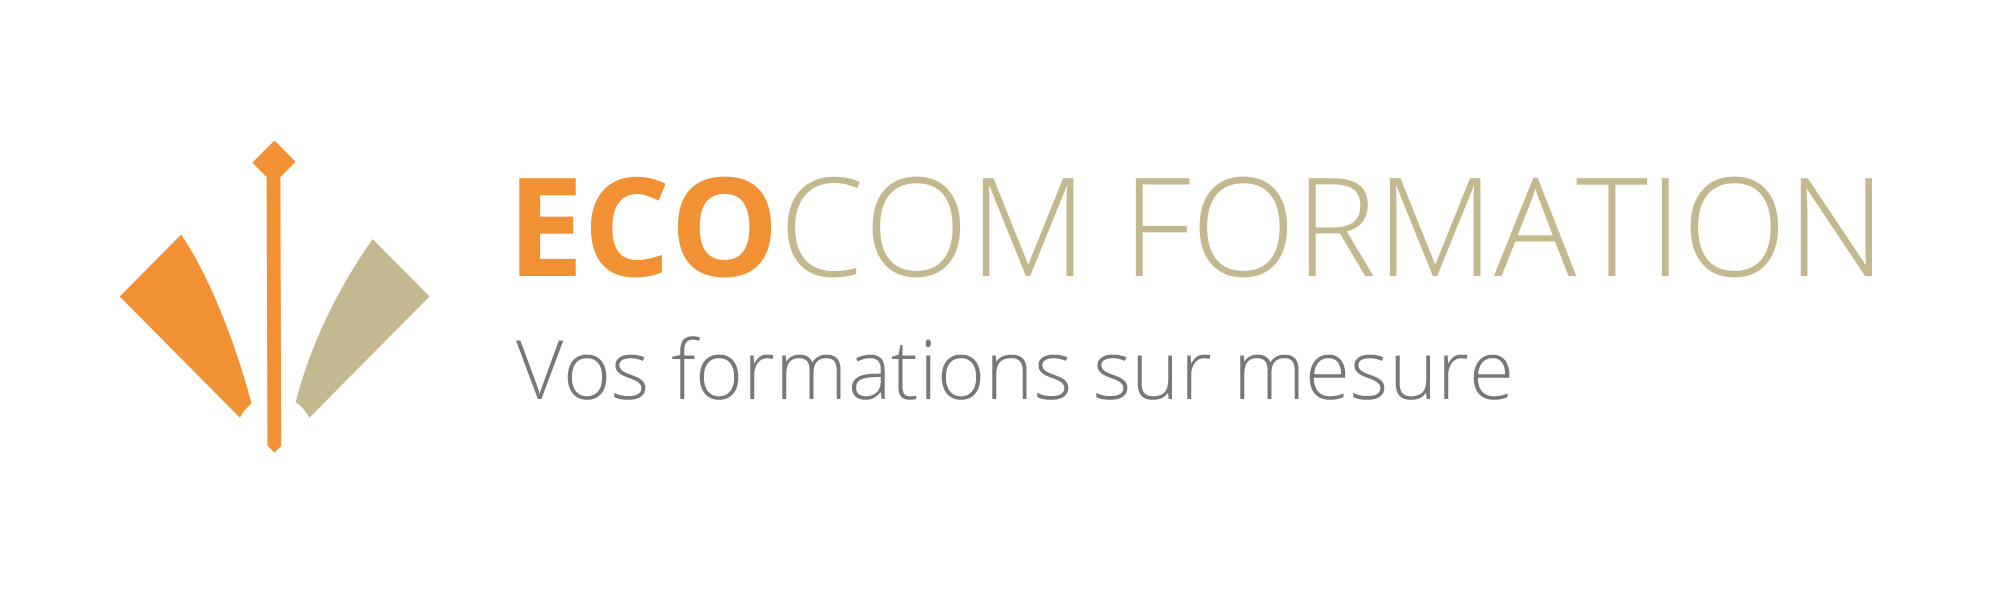 Ecocom Formation